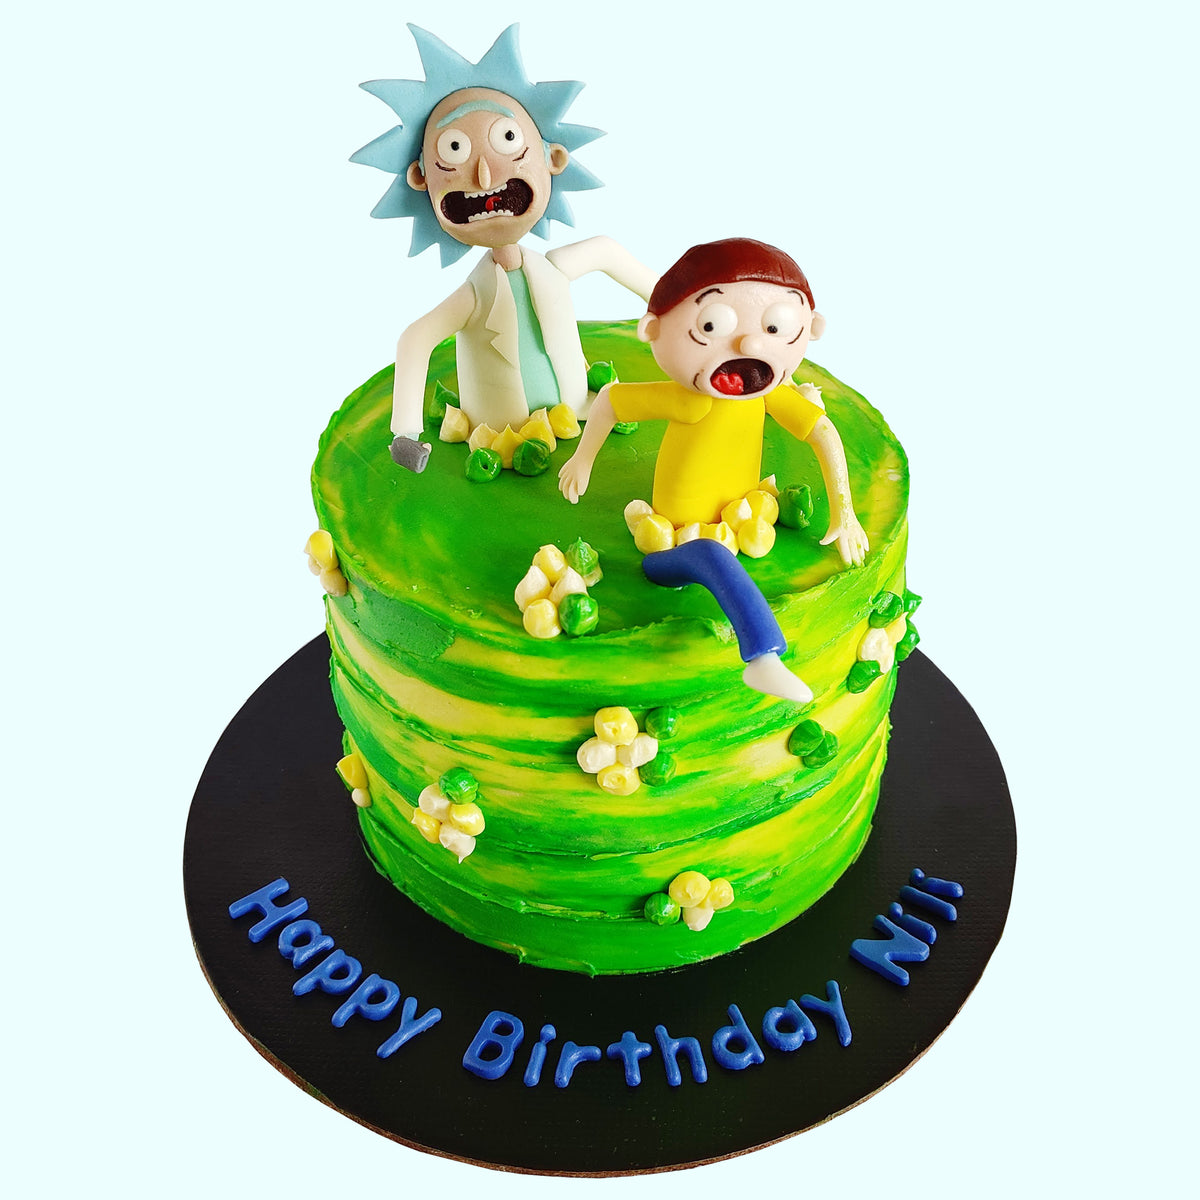 Rick and Morty TV Show Theme Cake